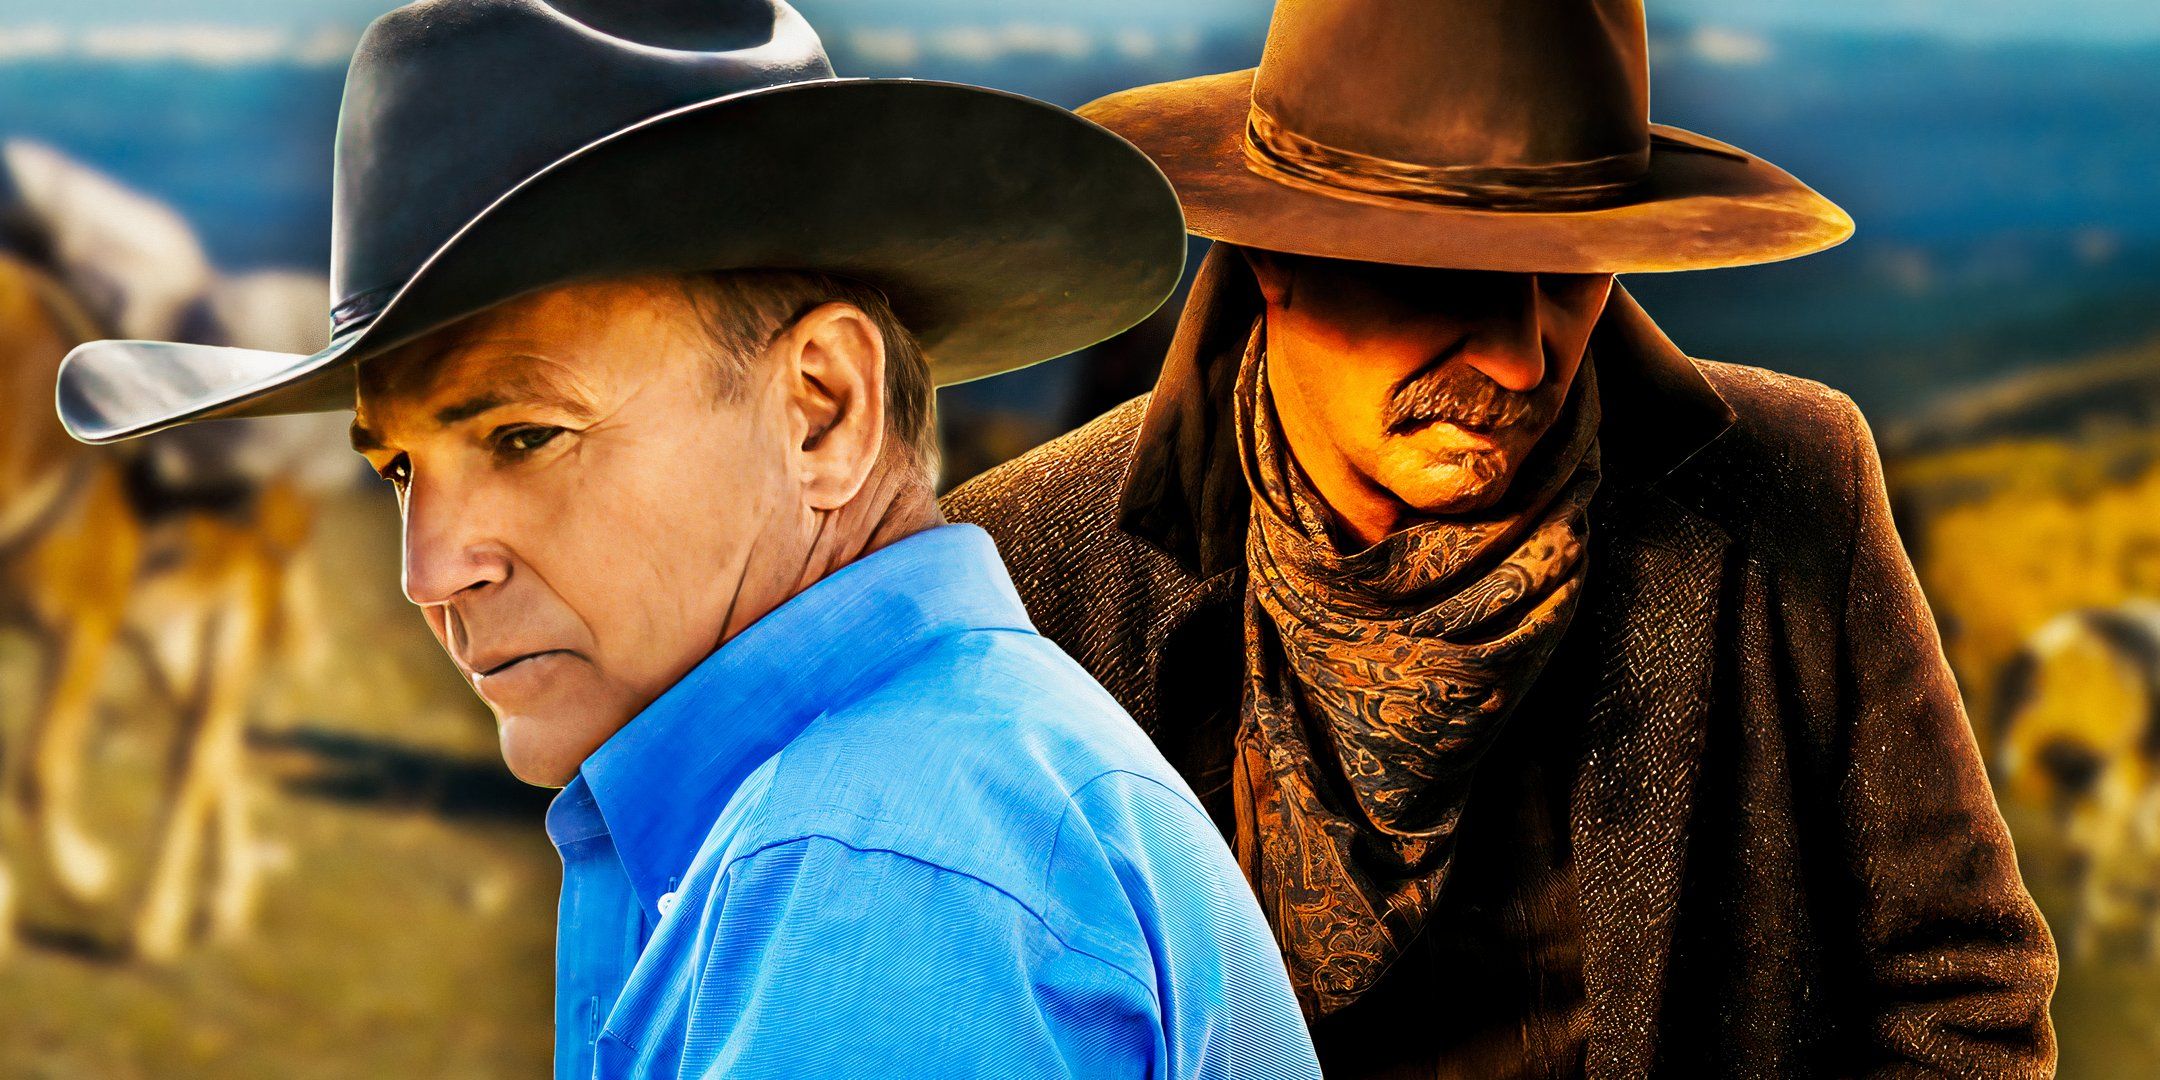 Kevin Costner in Yellowstone and Horizon: An American Saga.